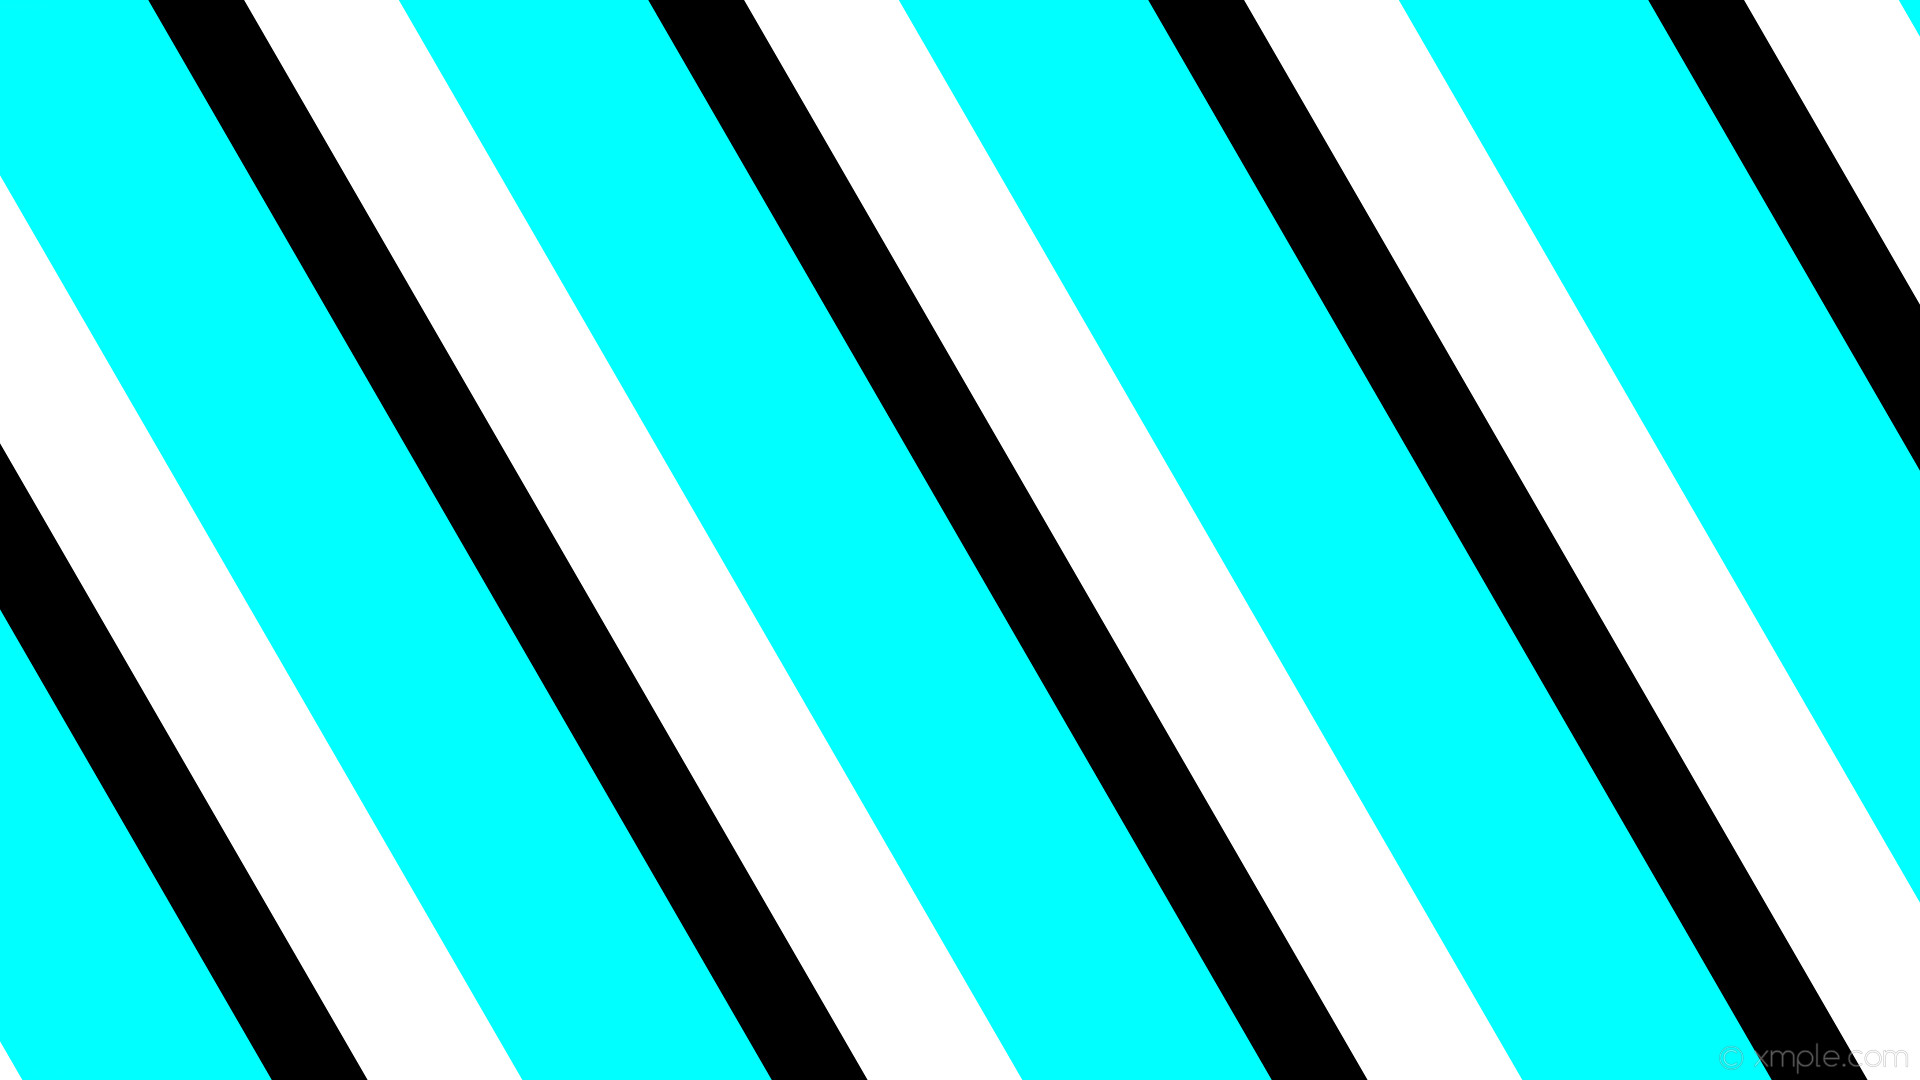 1920x1080 wallpaper streaks blue black lines white stripes aqua cyan #000000 #ffffff  #00ffff diagonal